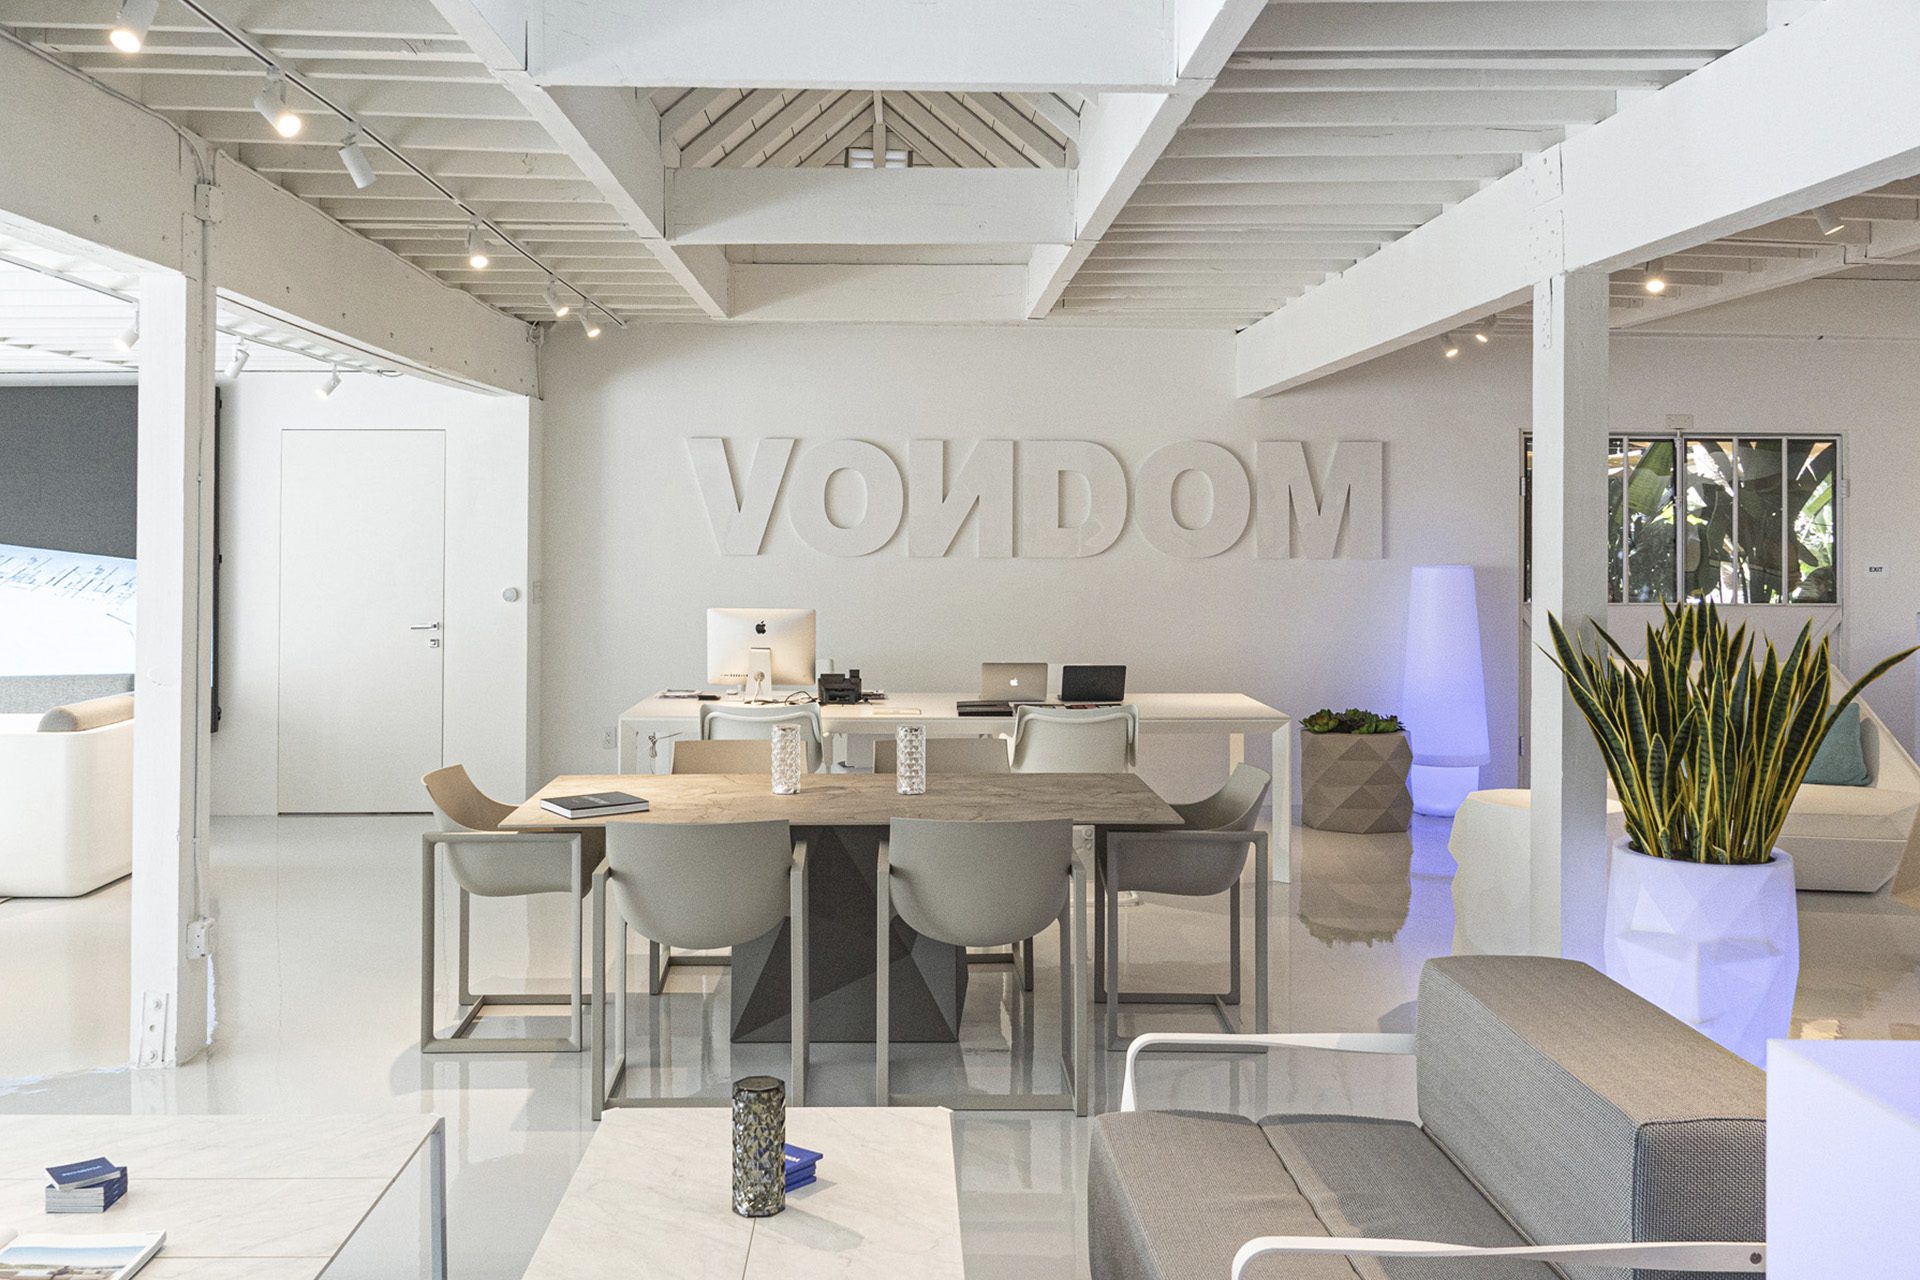 Vondom Los Angeles has a new showroom